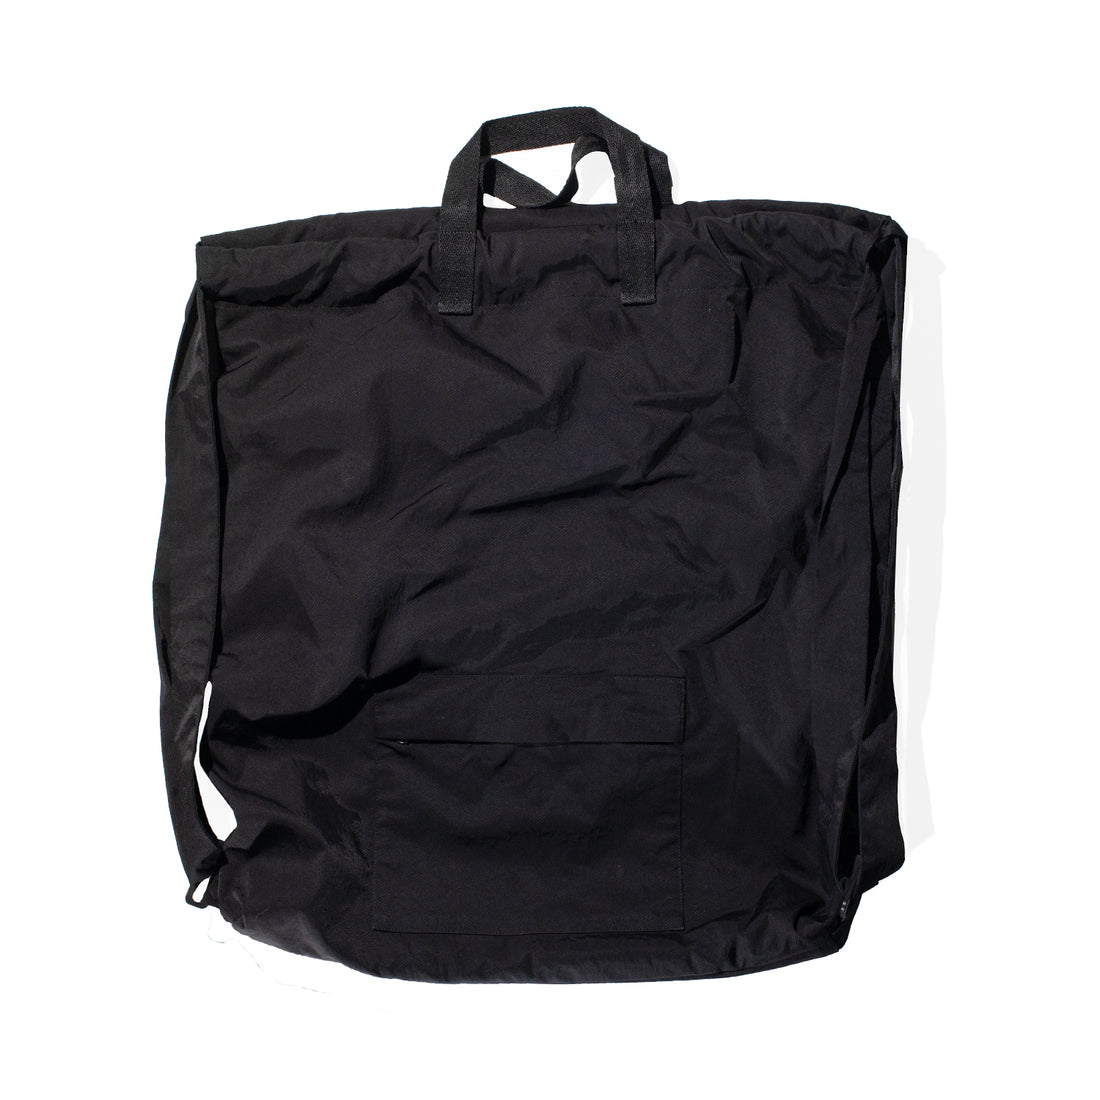 Grei Manifold Bag in Black